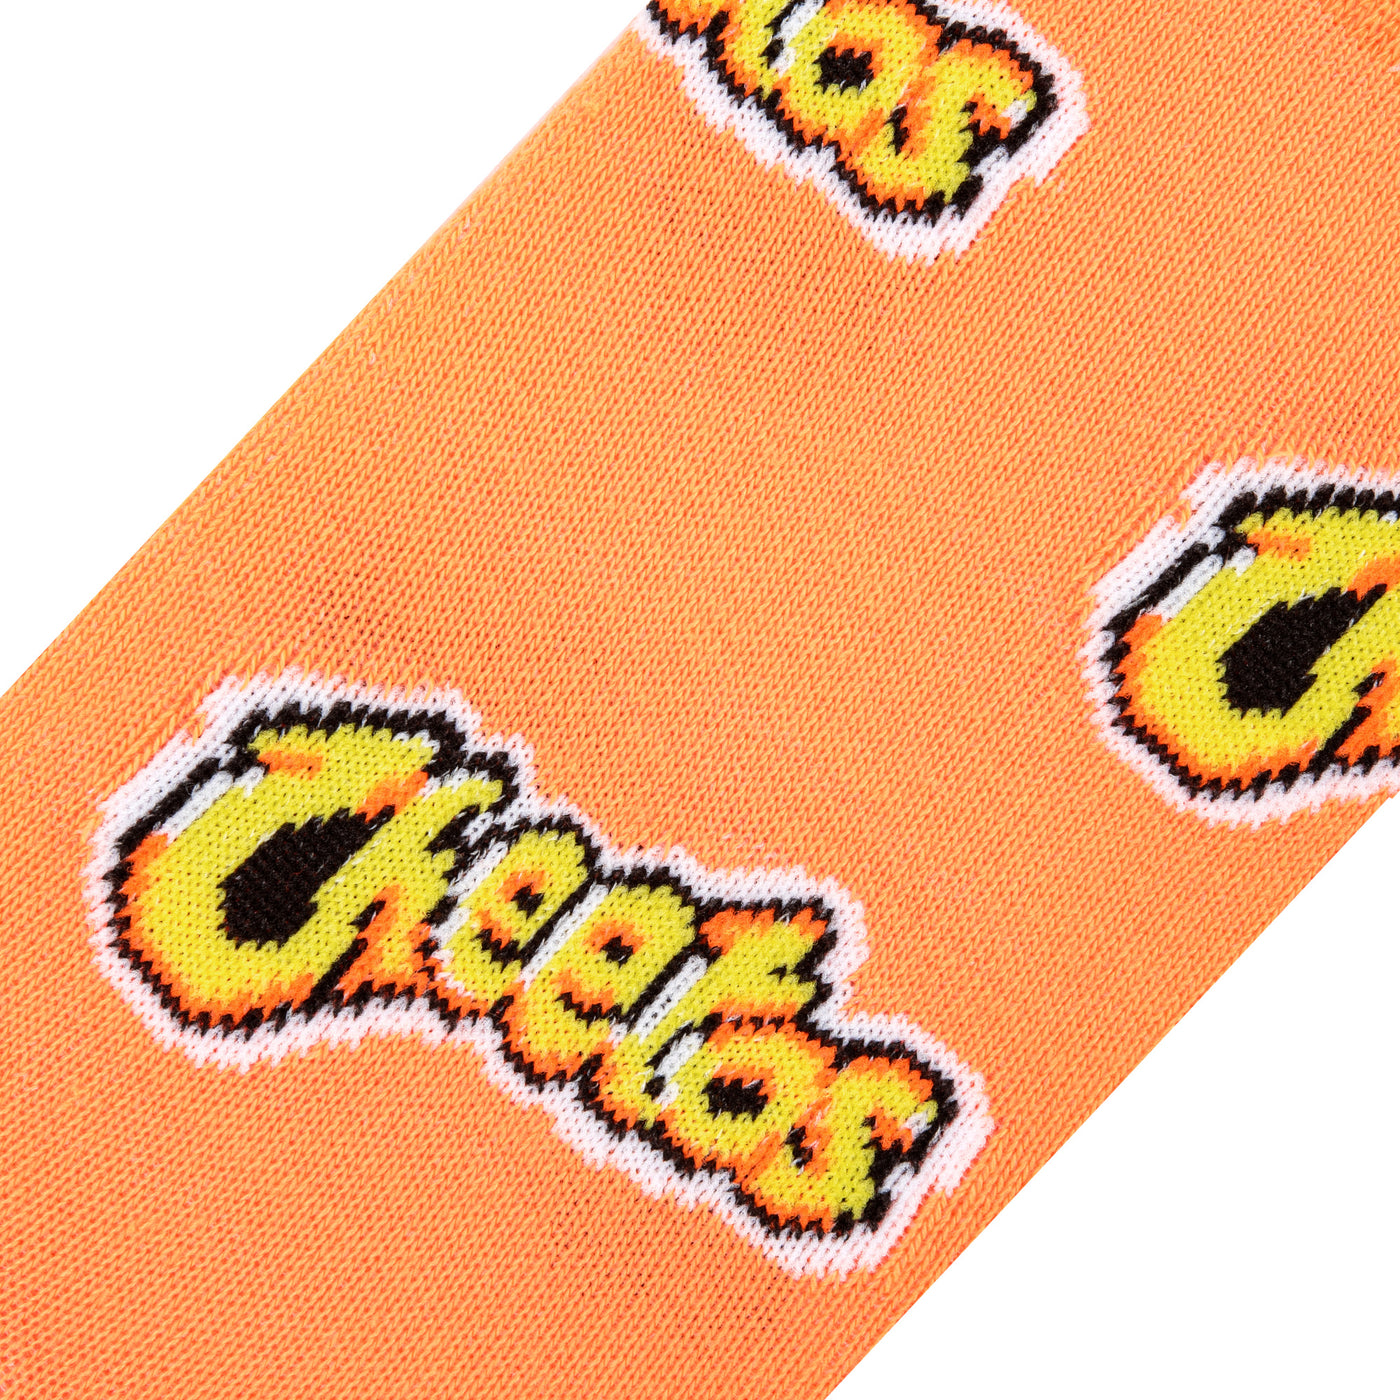 Cheetos Crew Socks - 2 Pack